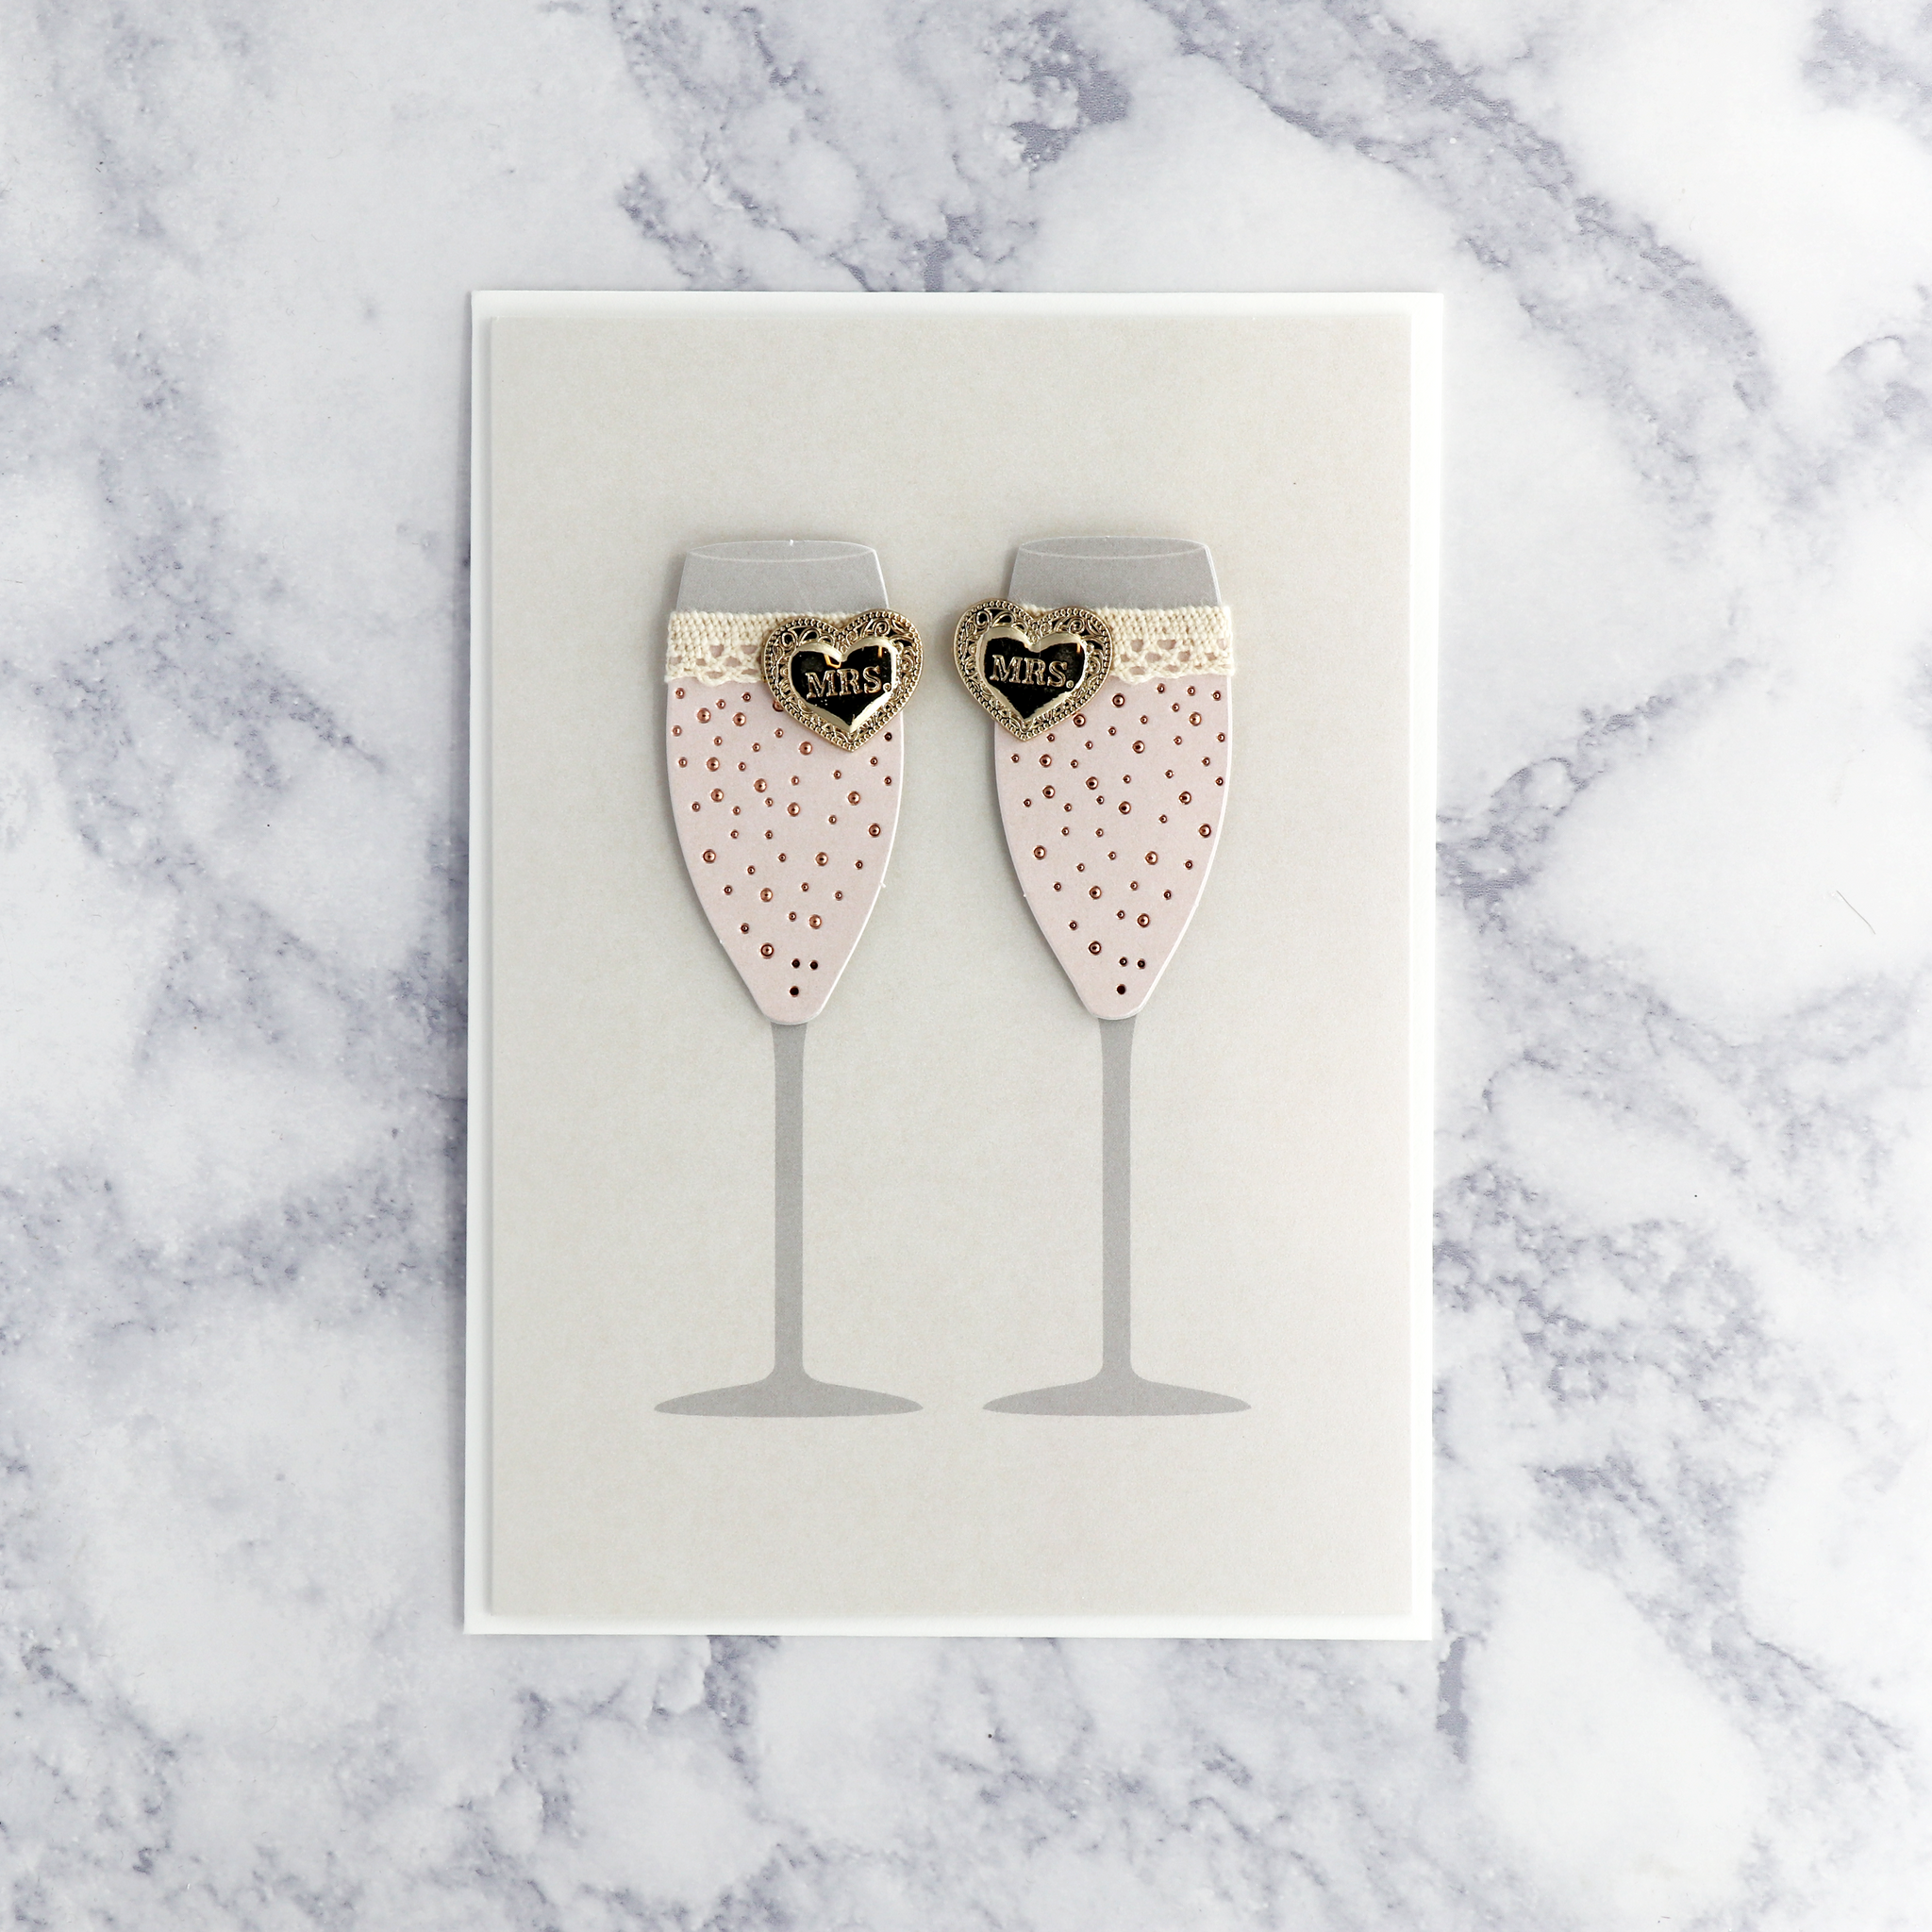 Champagne Glasses (Mrs. & Mrs.) Wedding Card (LGBTQ+/Same Sex)